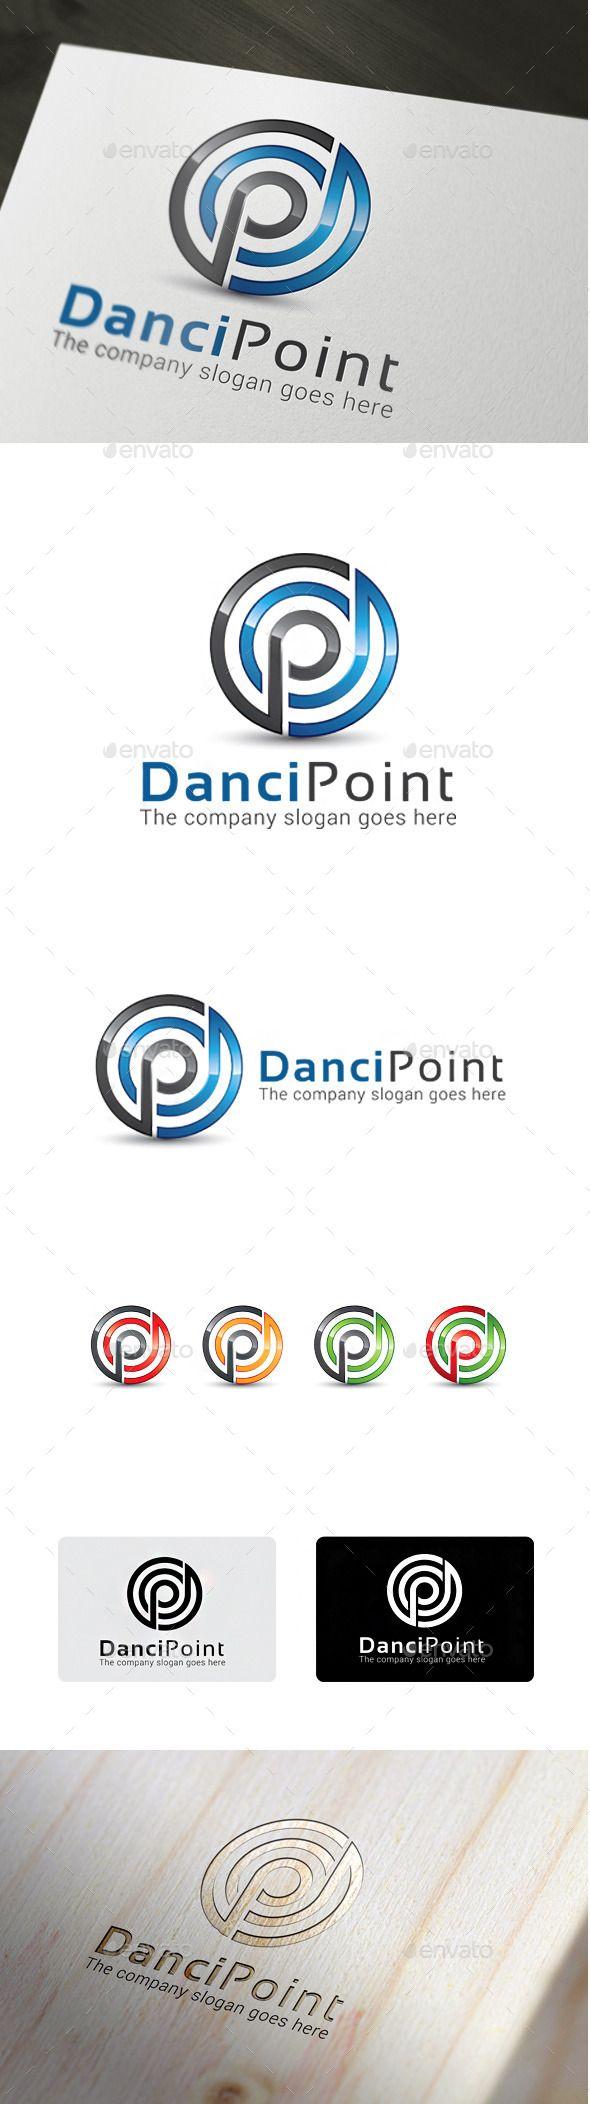 Yes Circle Logo - Pin by Bernice Cortez on Yes, Photoshop PSD | Pinterest | Logo ...